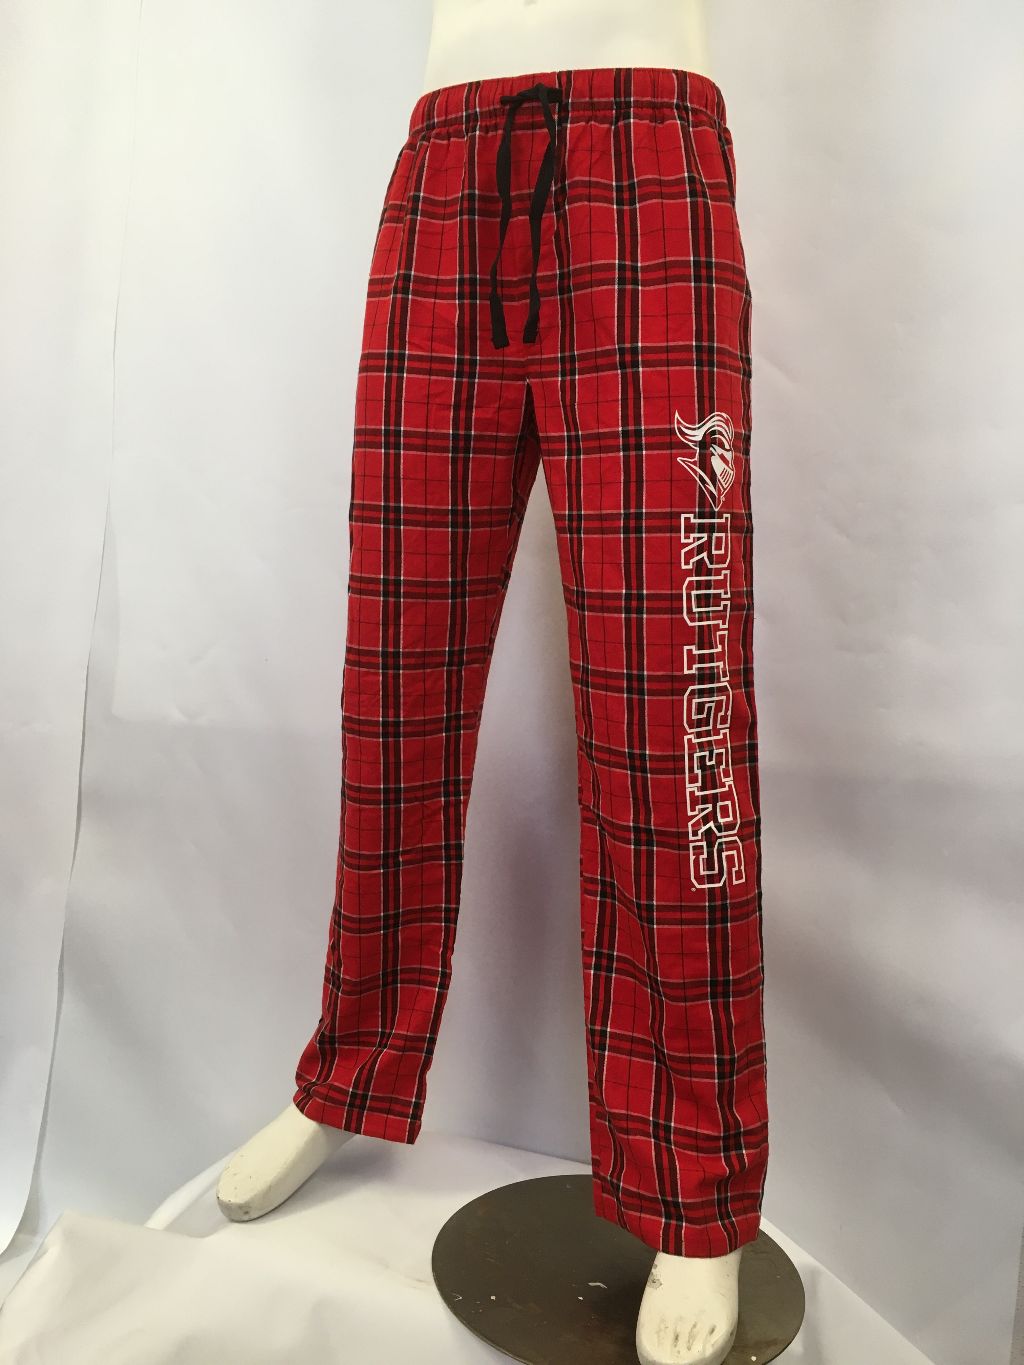 Rutgers Flannel Pants - Scarlet Fever Rutgers Gear